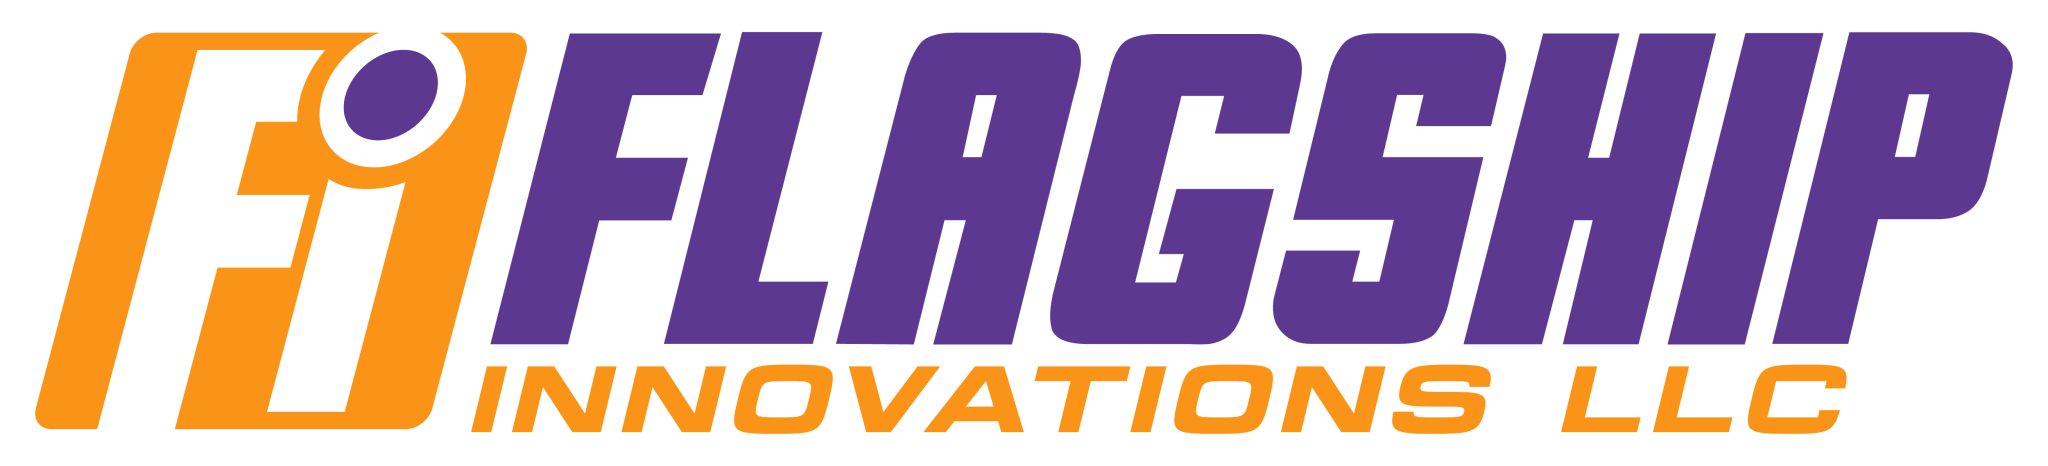 Flagship Innovations LLC